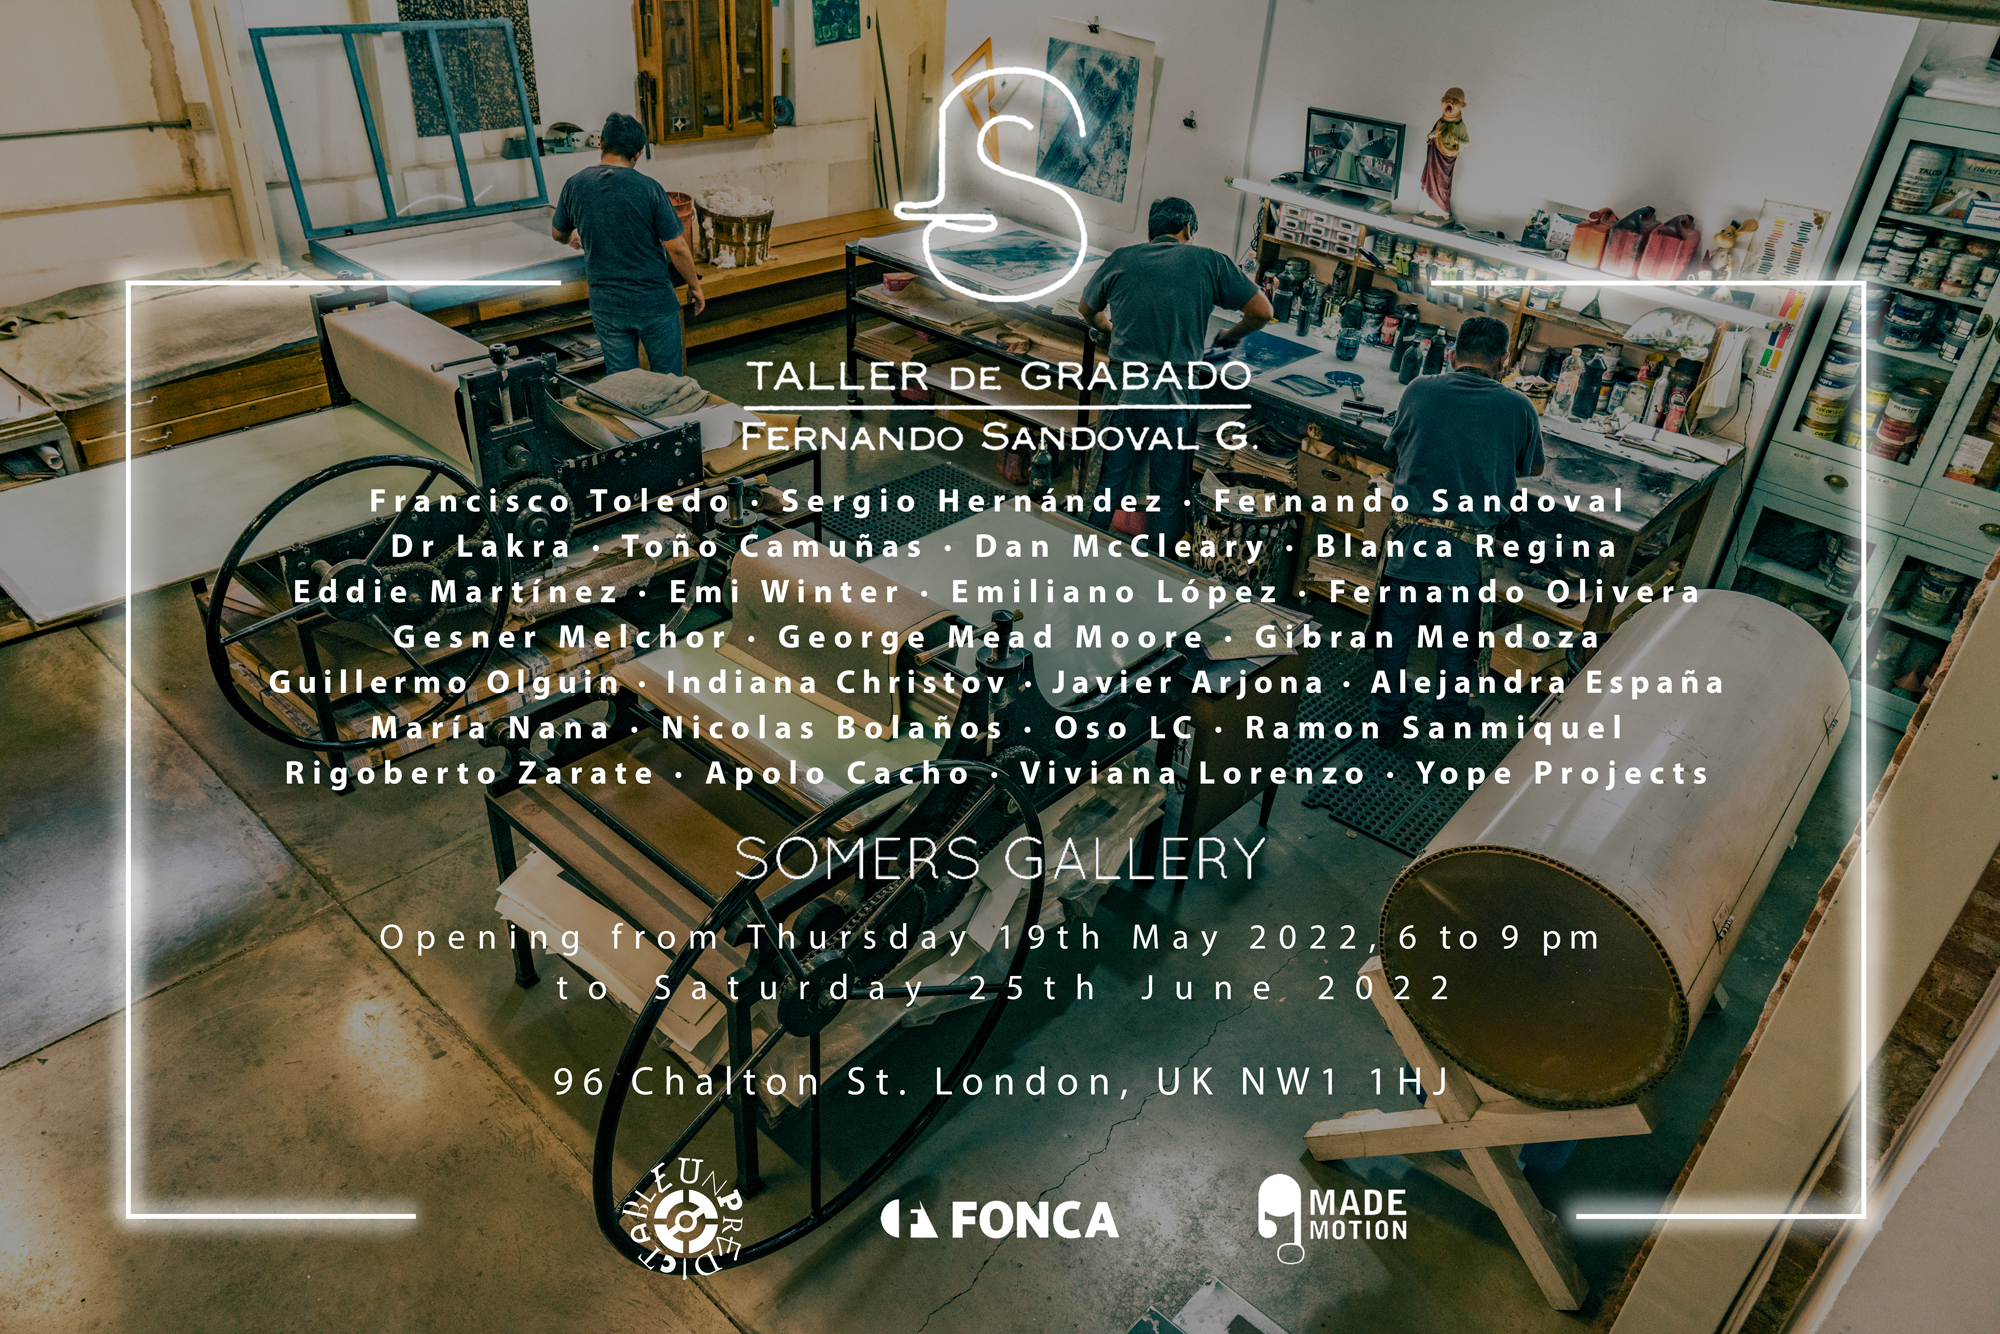 Sangfer Studio, Mexico 30 years of engraving art in Oaxaca